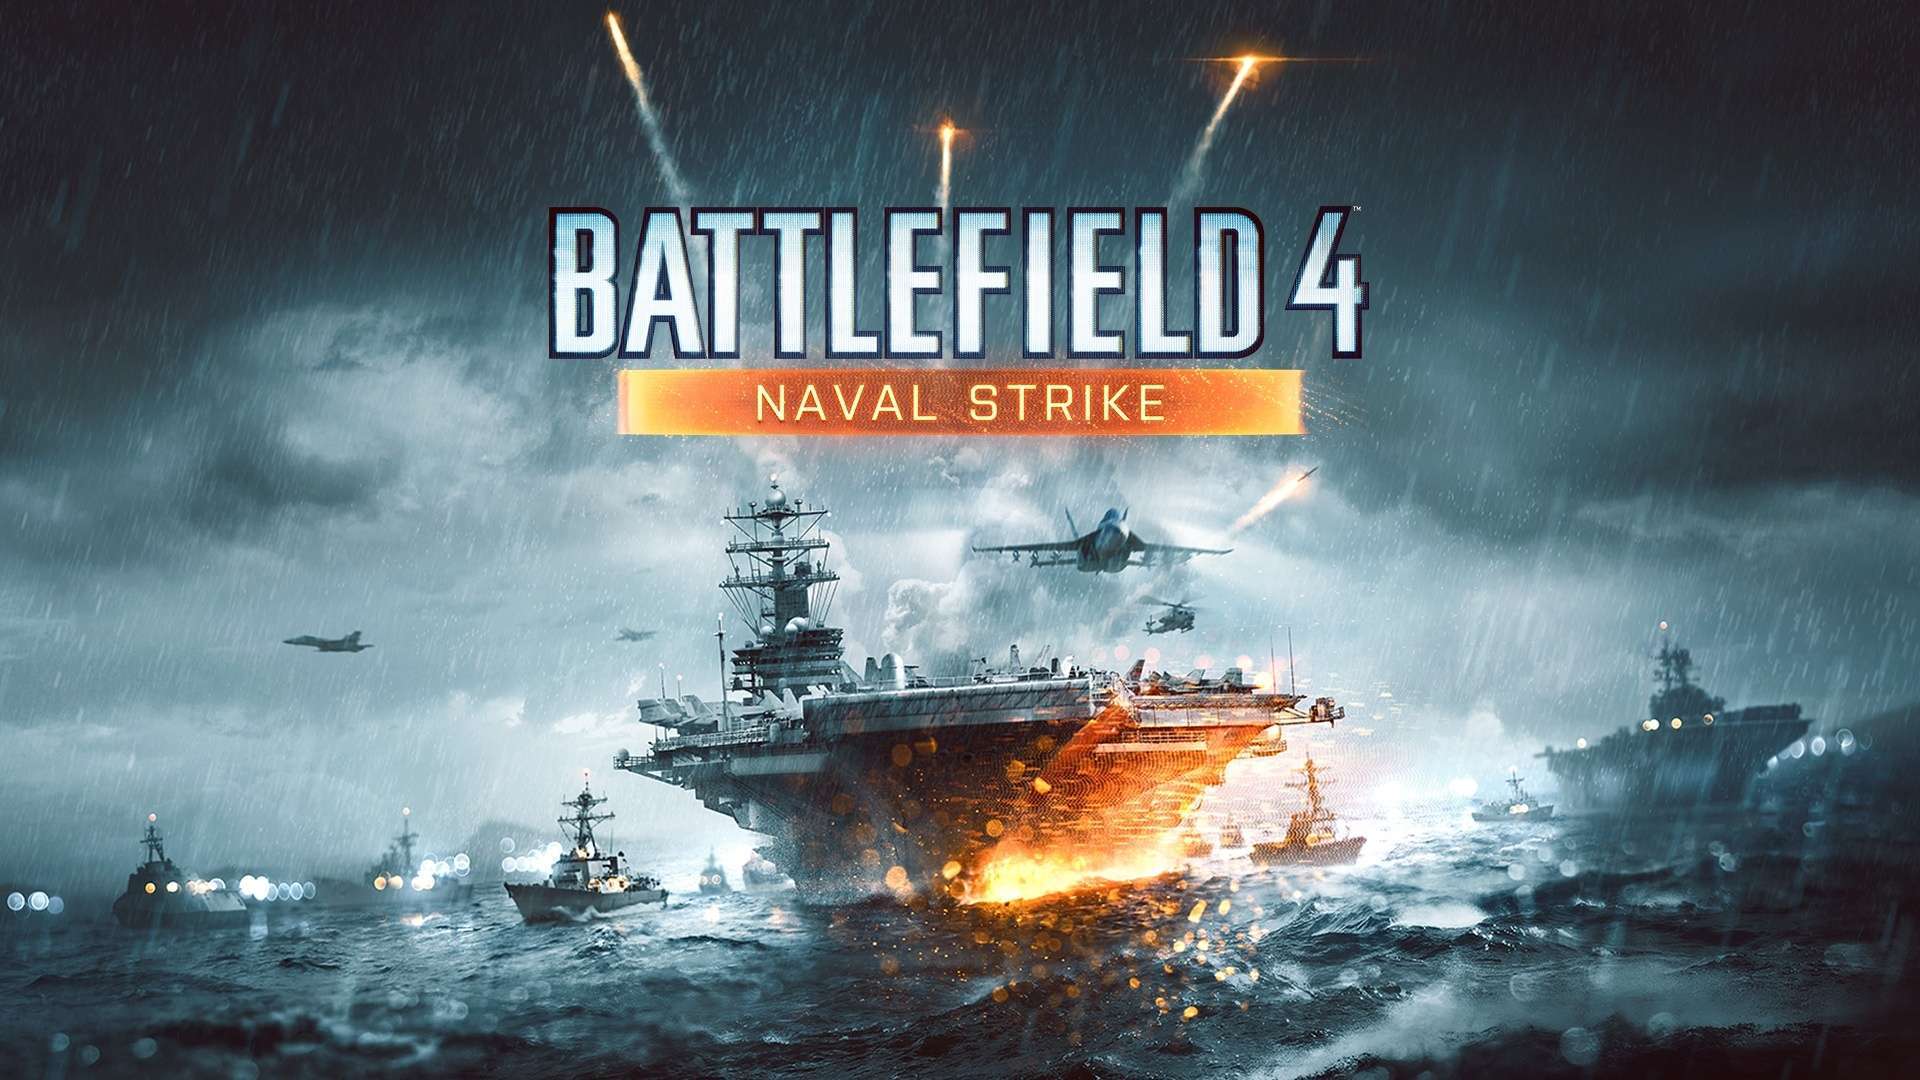 Wallpaper Battlefield Naval Strike HD Wallpaper 1080p Upload at